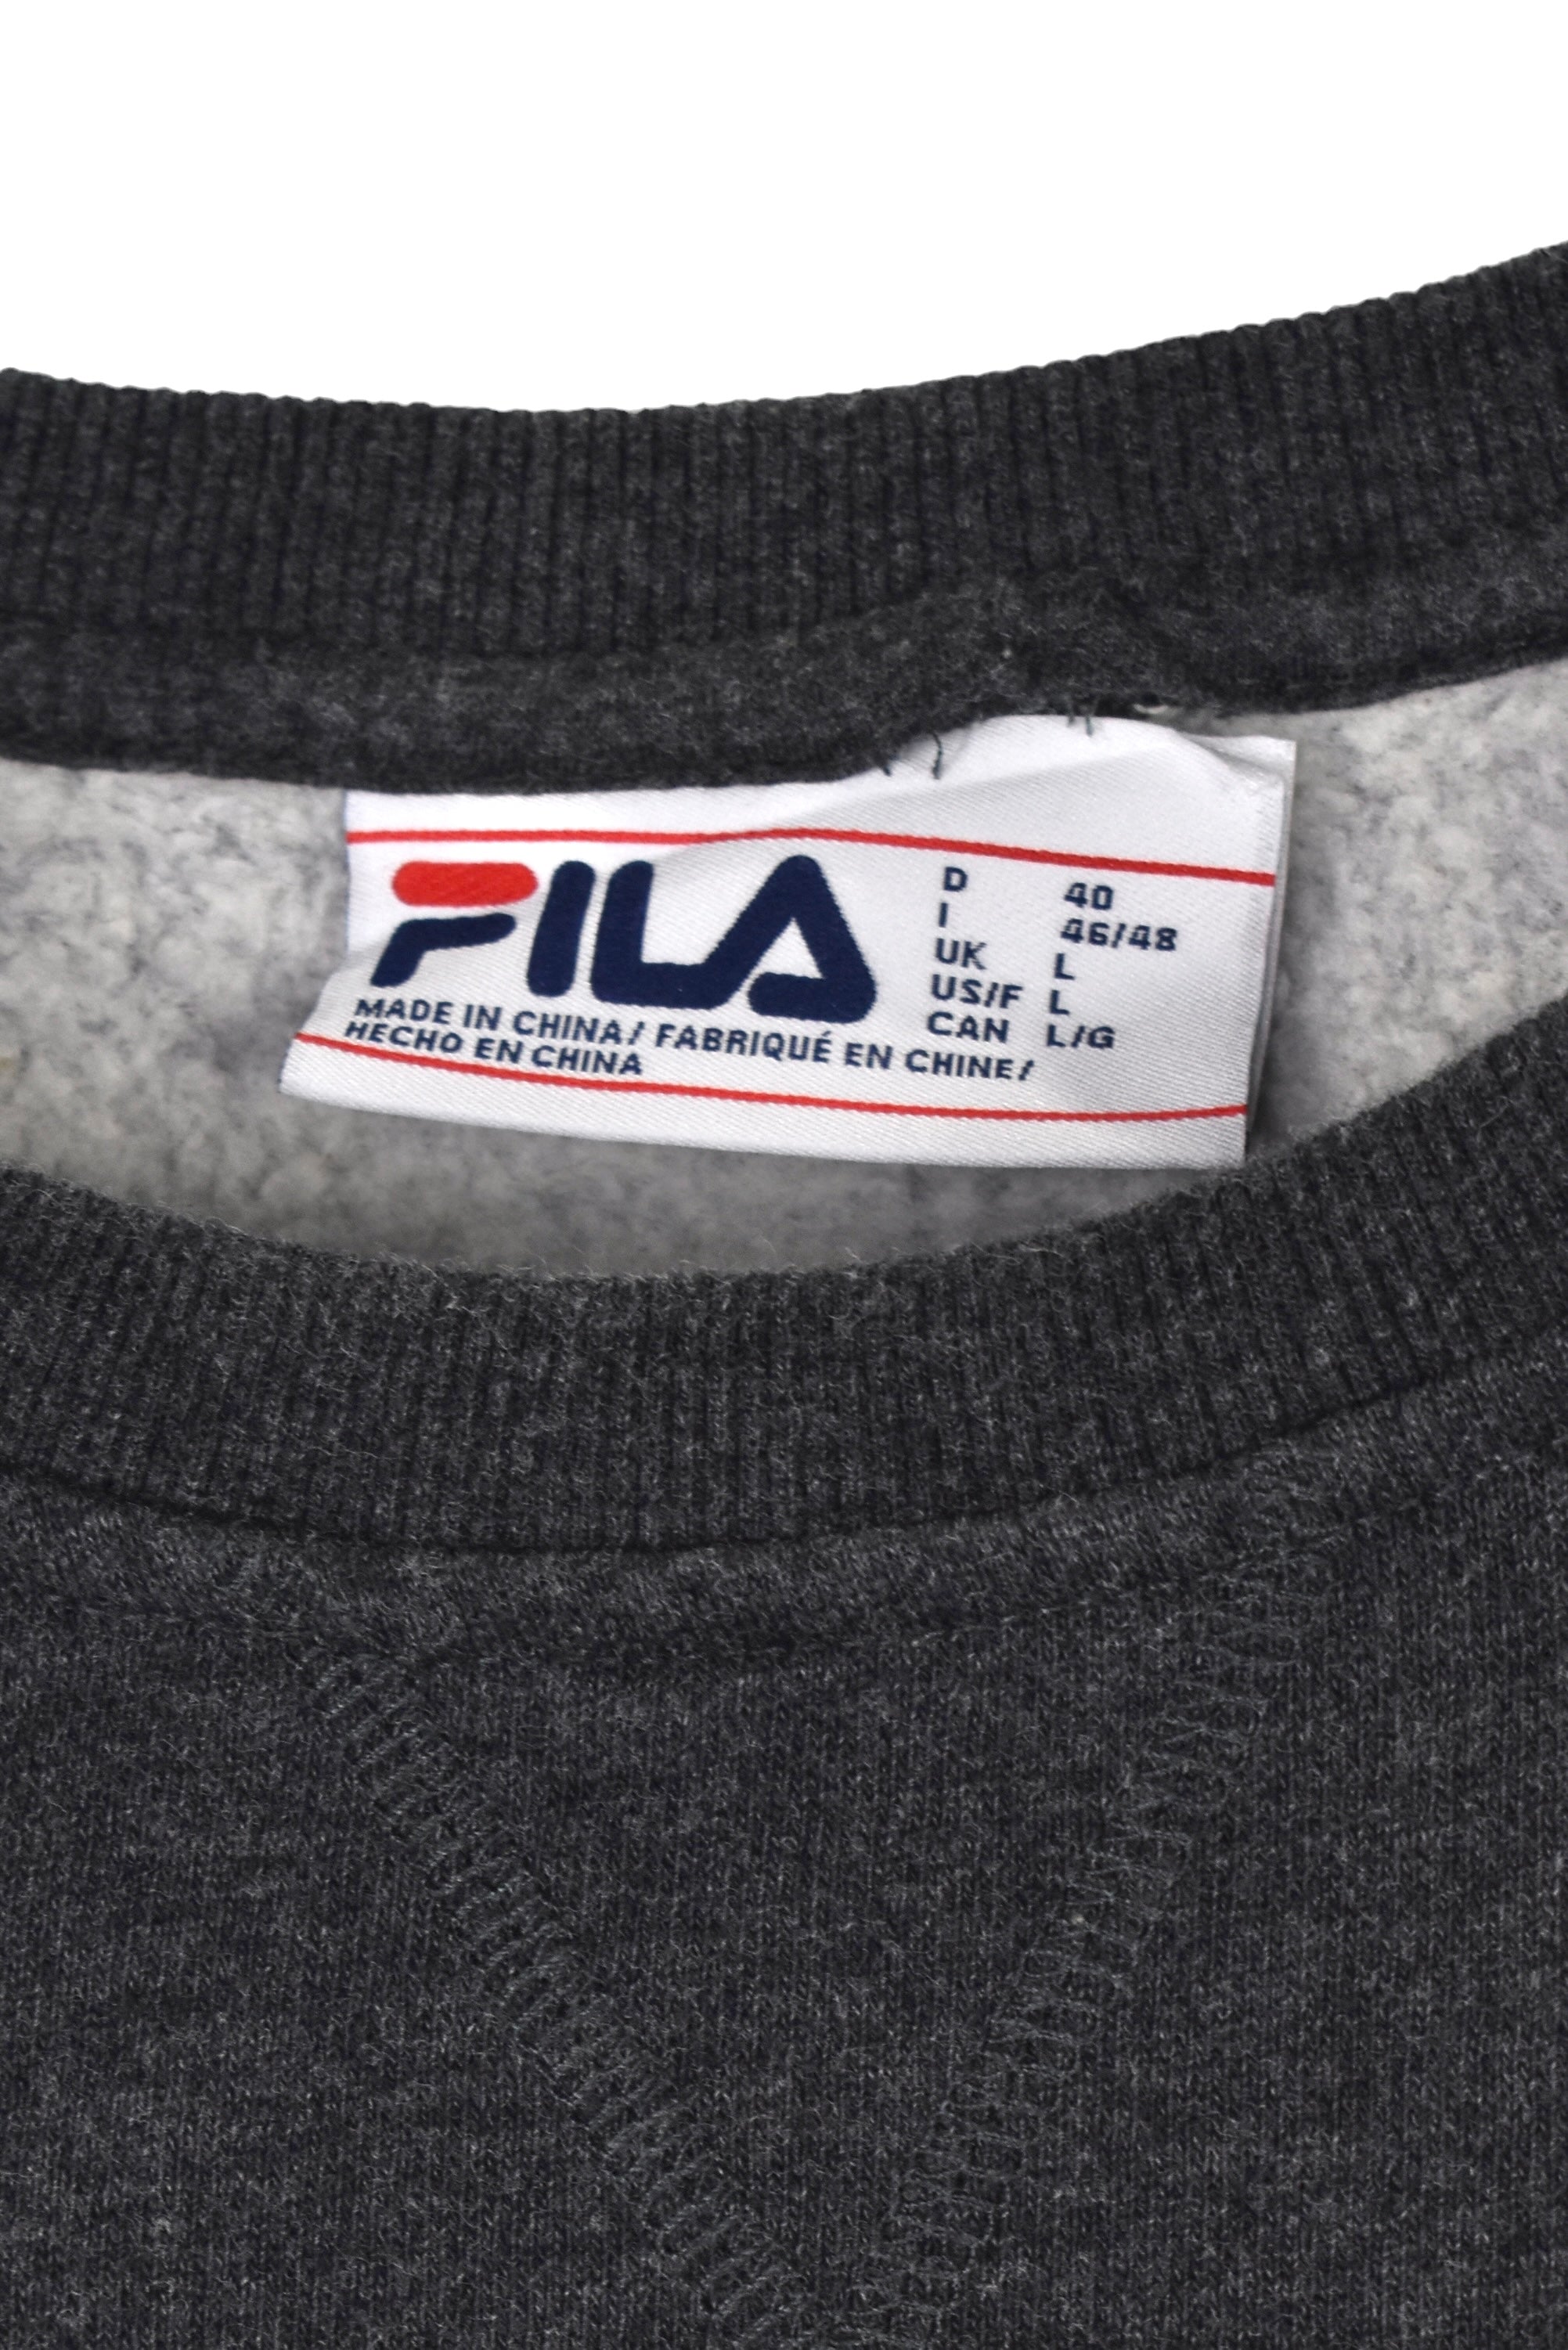 Womens vintage Fila sweatshirt (M), grey embroidered crewneck